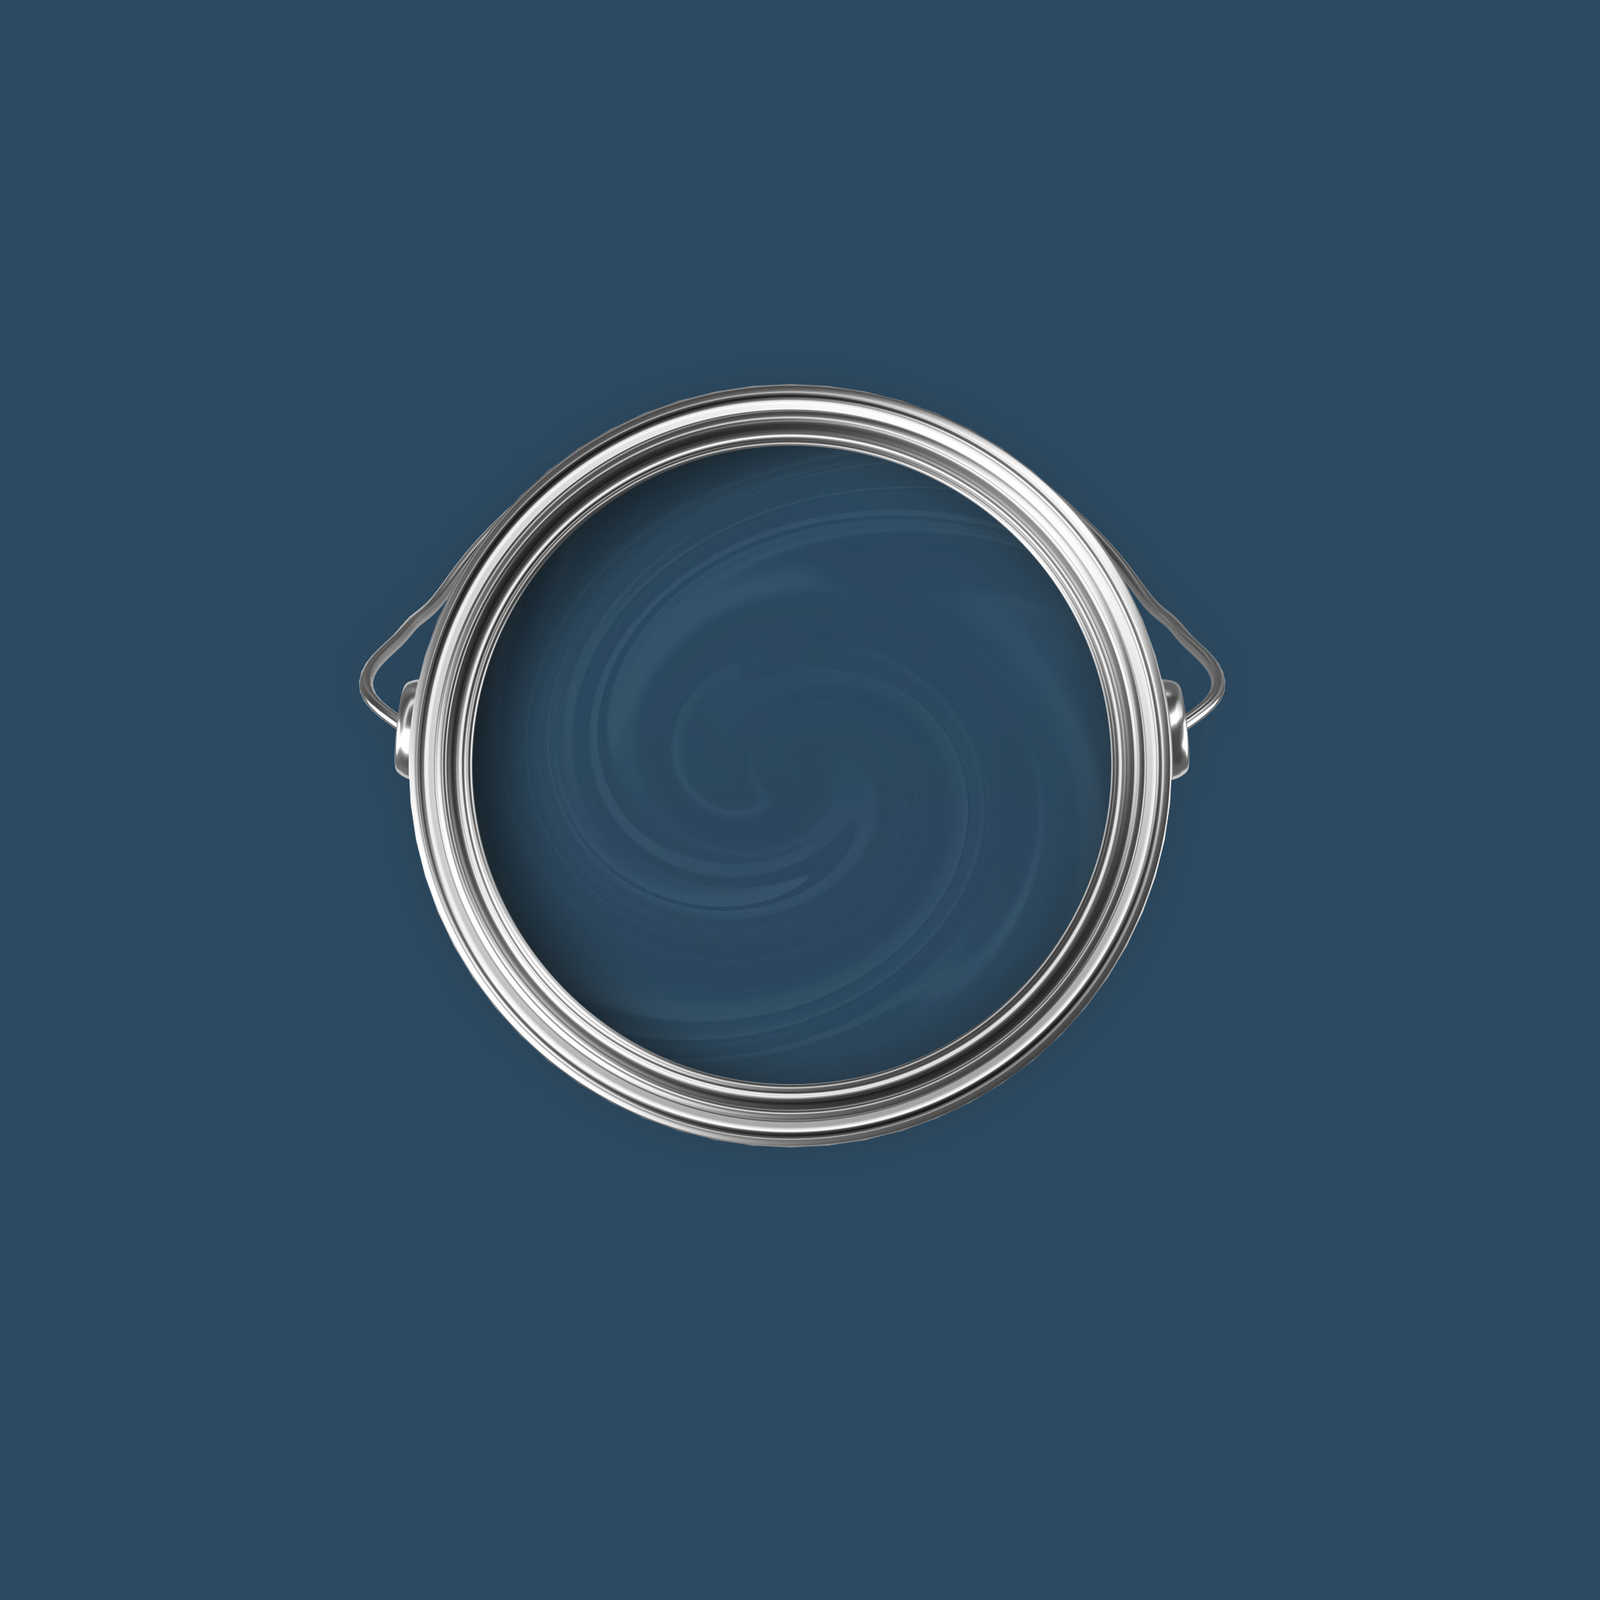             Premium Wall Paint Noble Dark Blue »Blissful Blue« NW308 – 2.5 litre
        